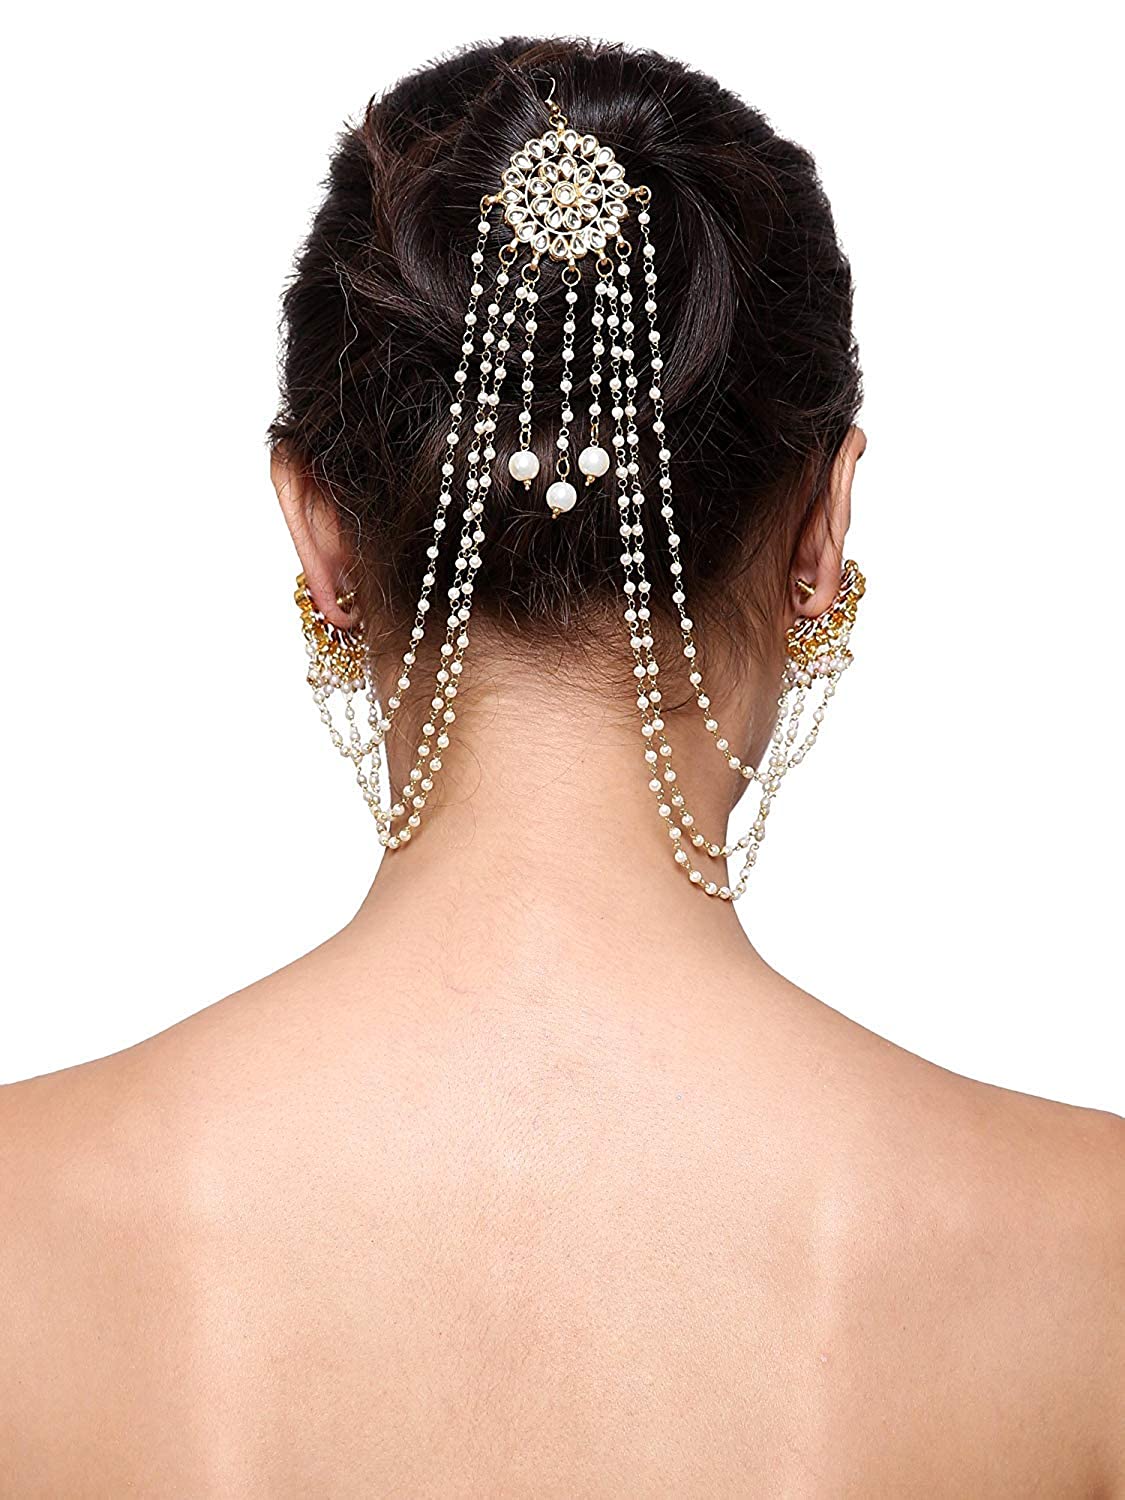 Abhaah Triple Layer Kaan/ear Chain bahubali inspired Gold Tone Pearls Ear  To Hair Accessory/Hair kundan stud earrings with Brooch Juda pin Hair  Decoration for Women Girls for Wedding |